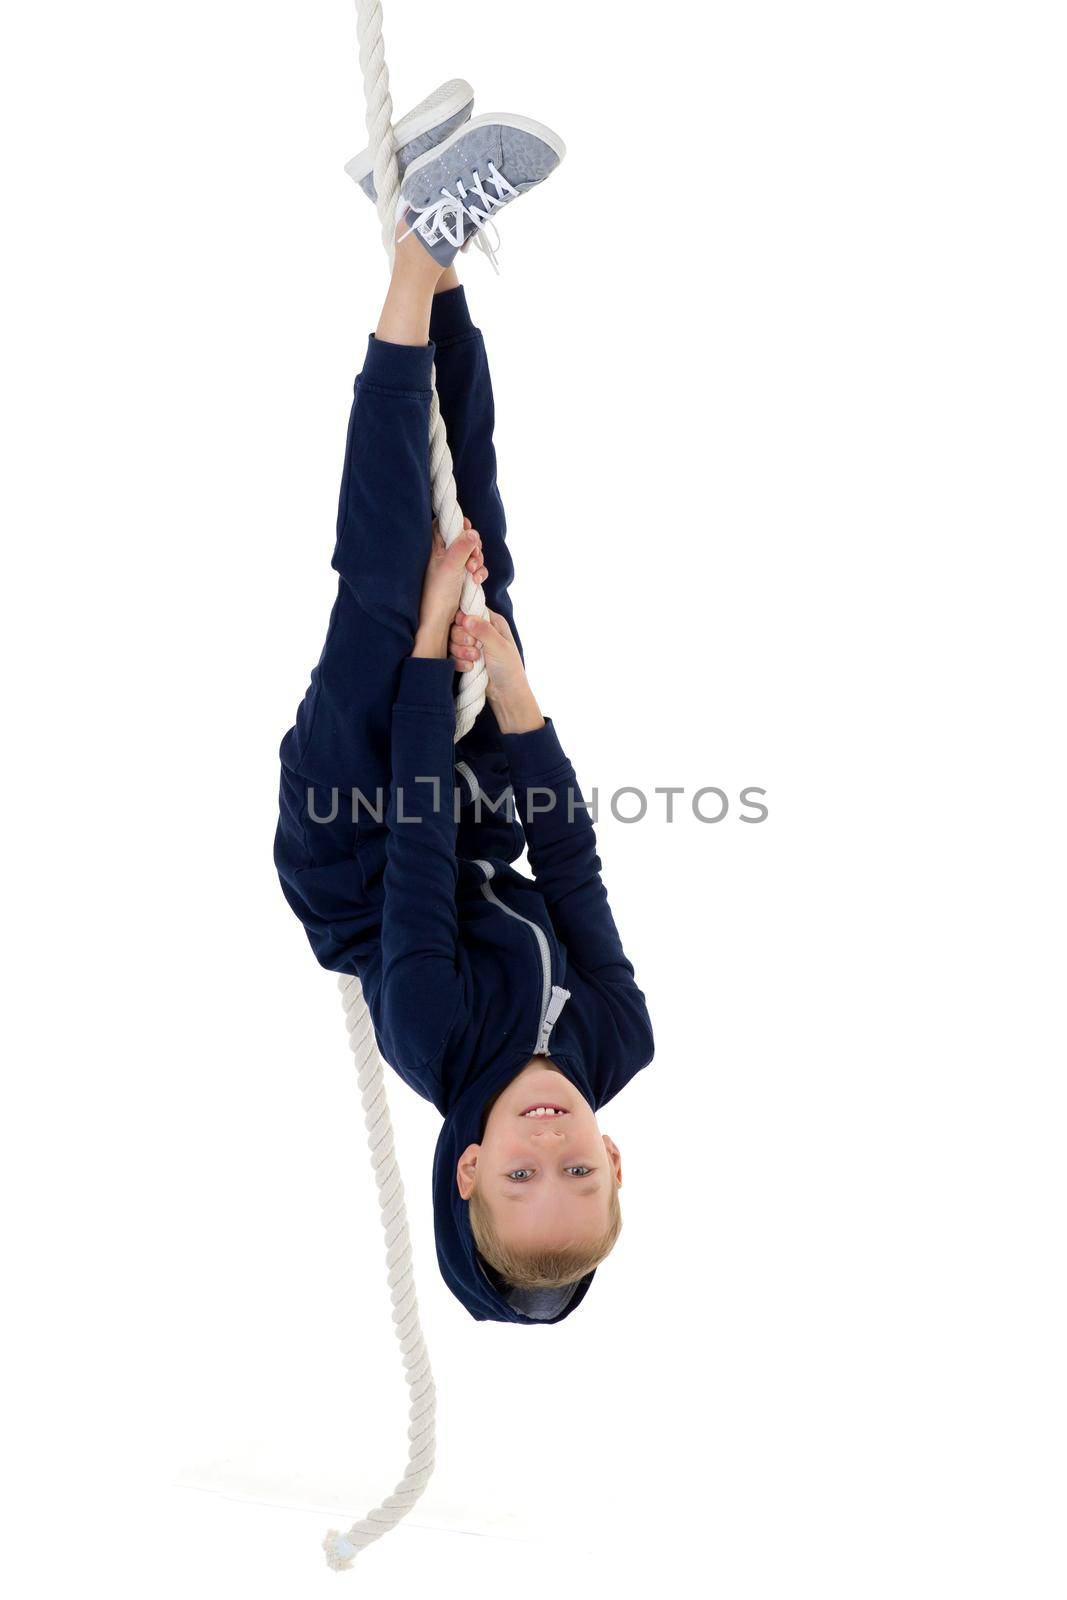 Active boy swing upside down on the rope by kolesnikov_studio